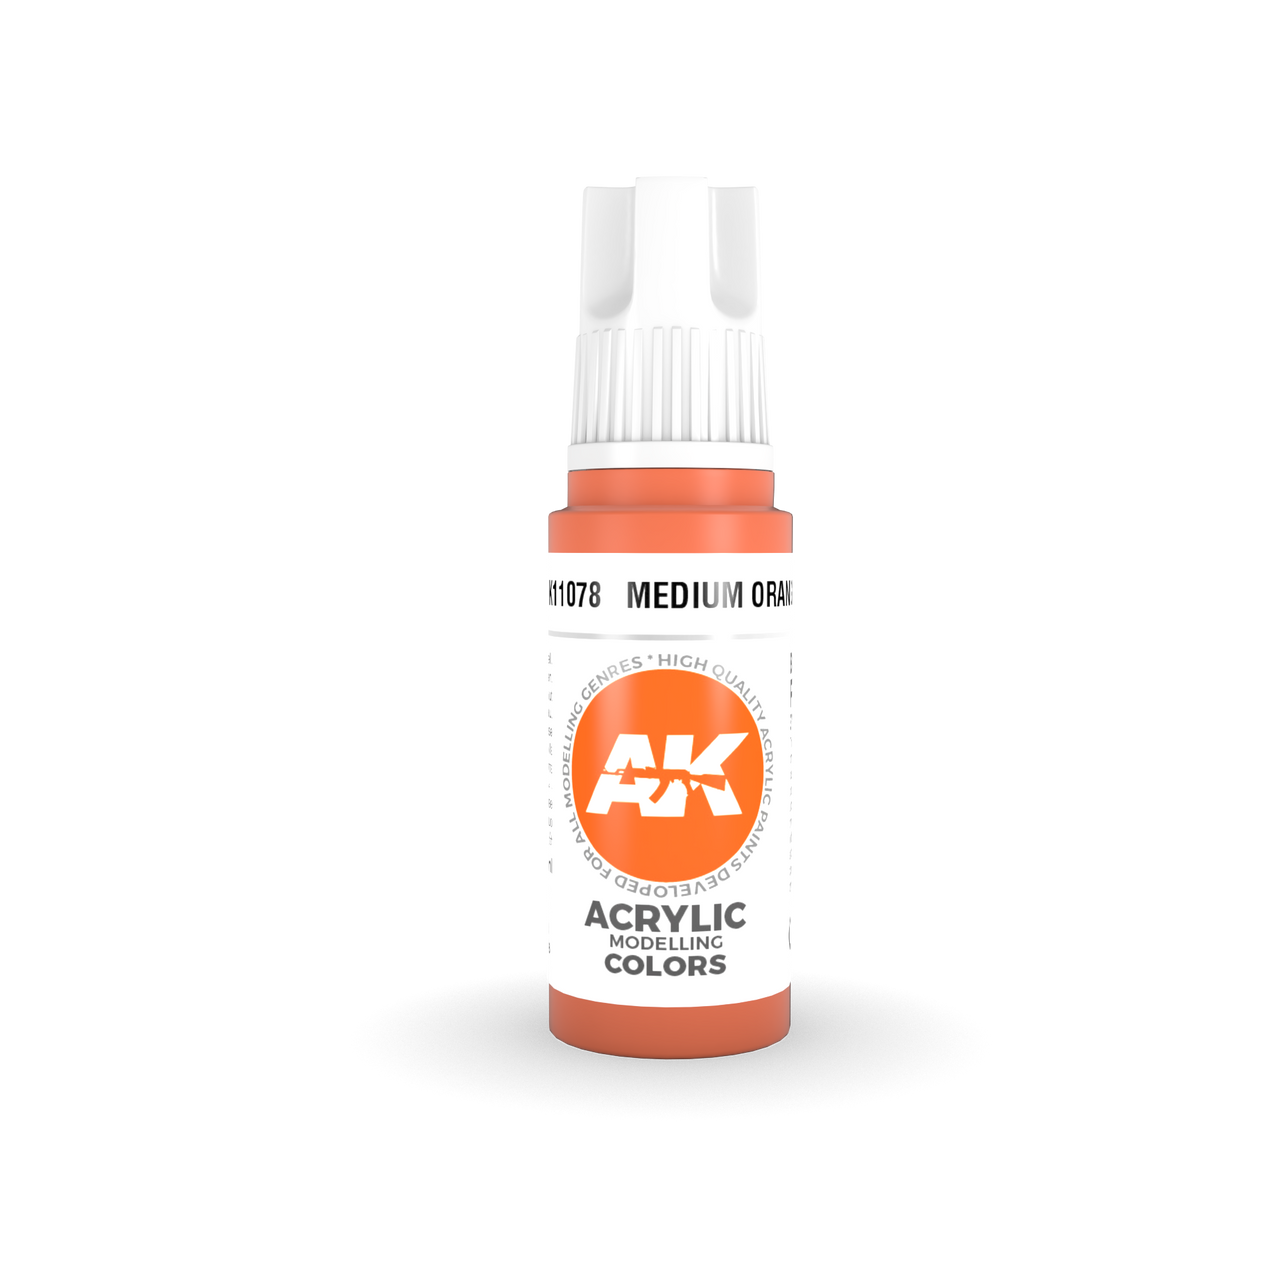 Medium Orange - AK 3Gen Acrylic